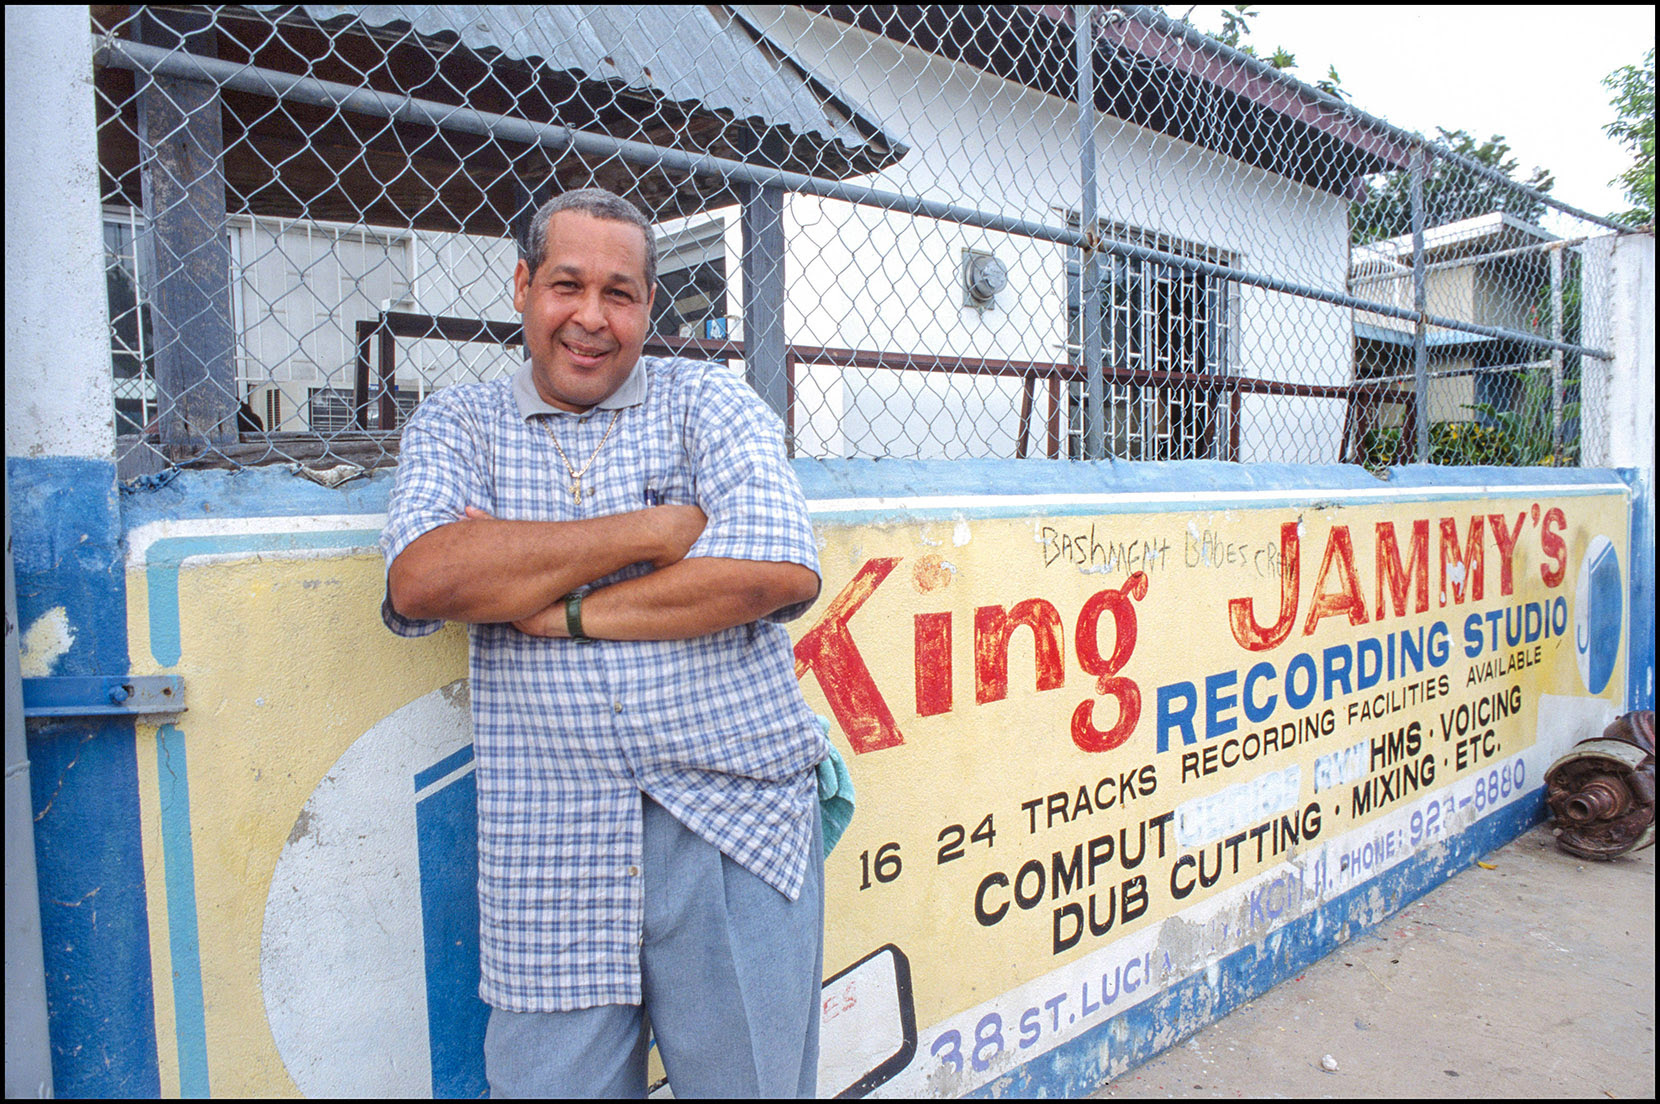 King Jammy outside his Kingston, Jamaica studio August 2000